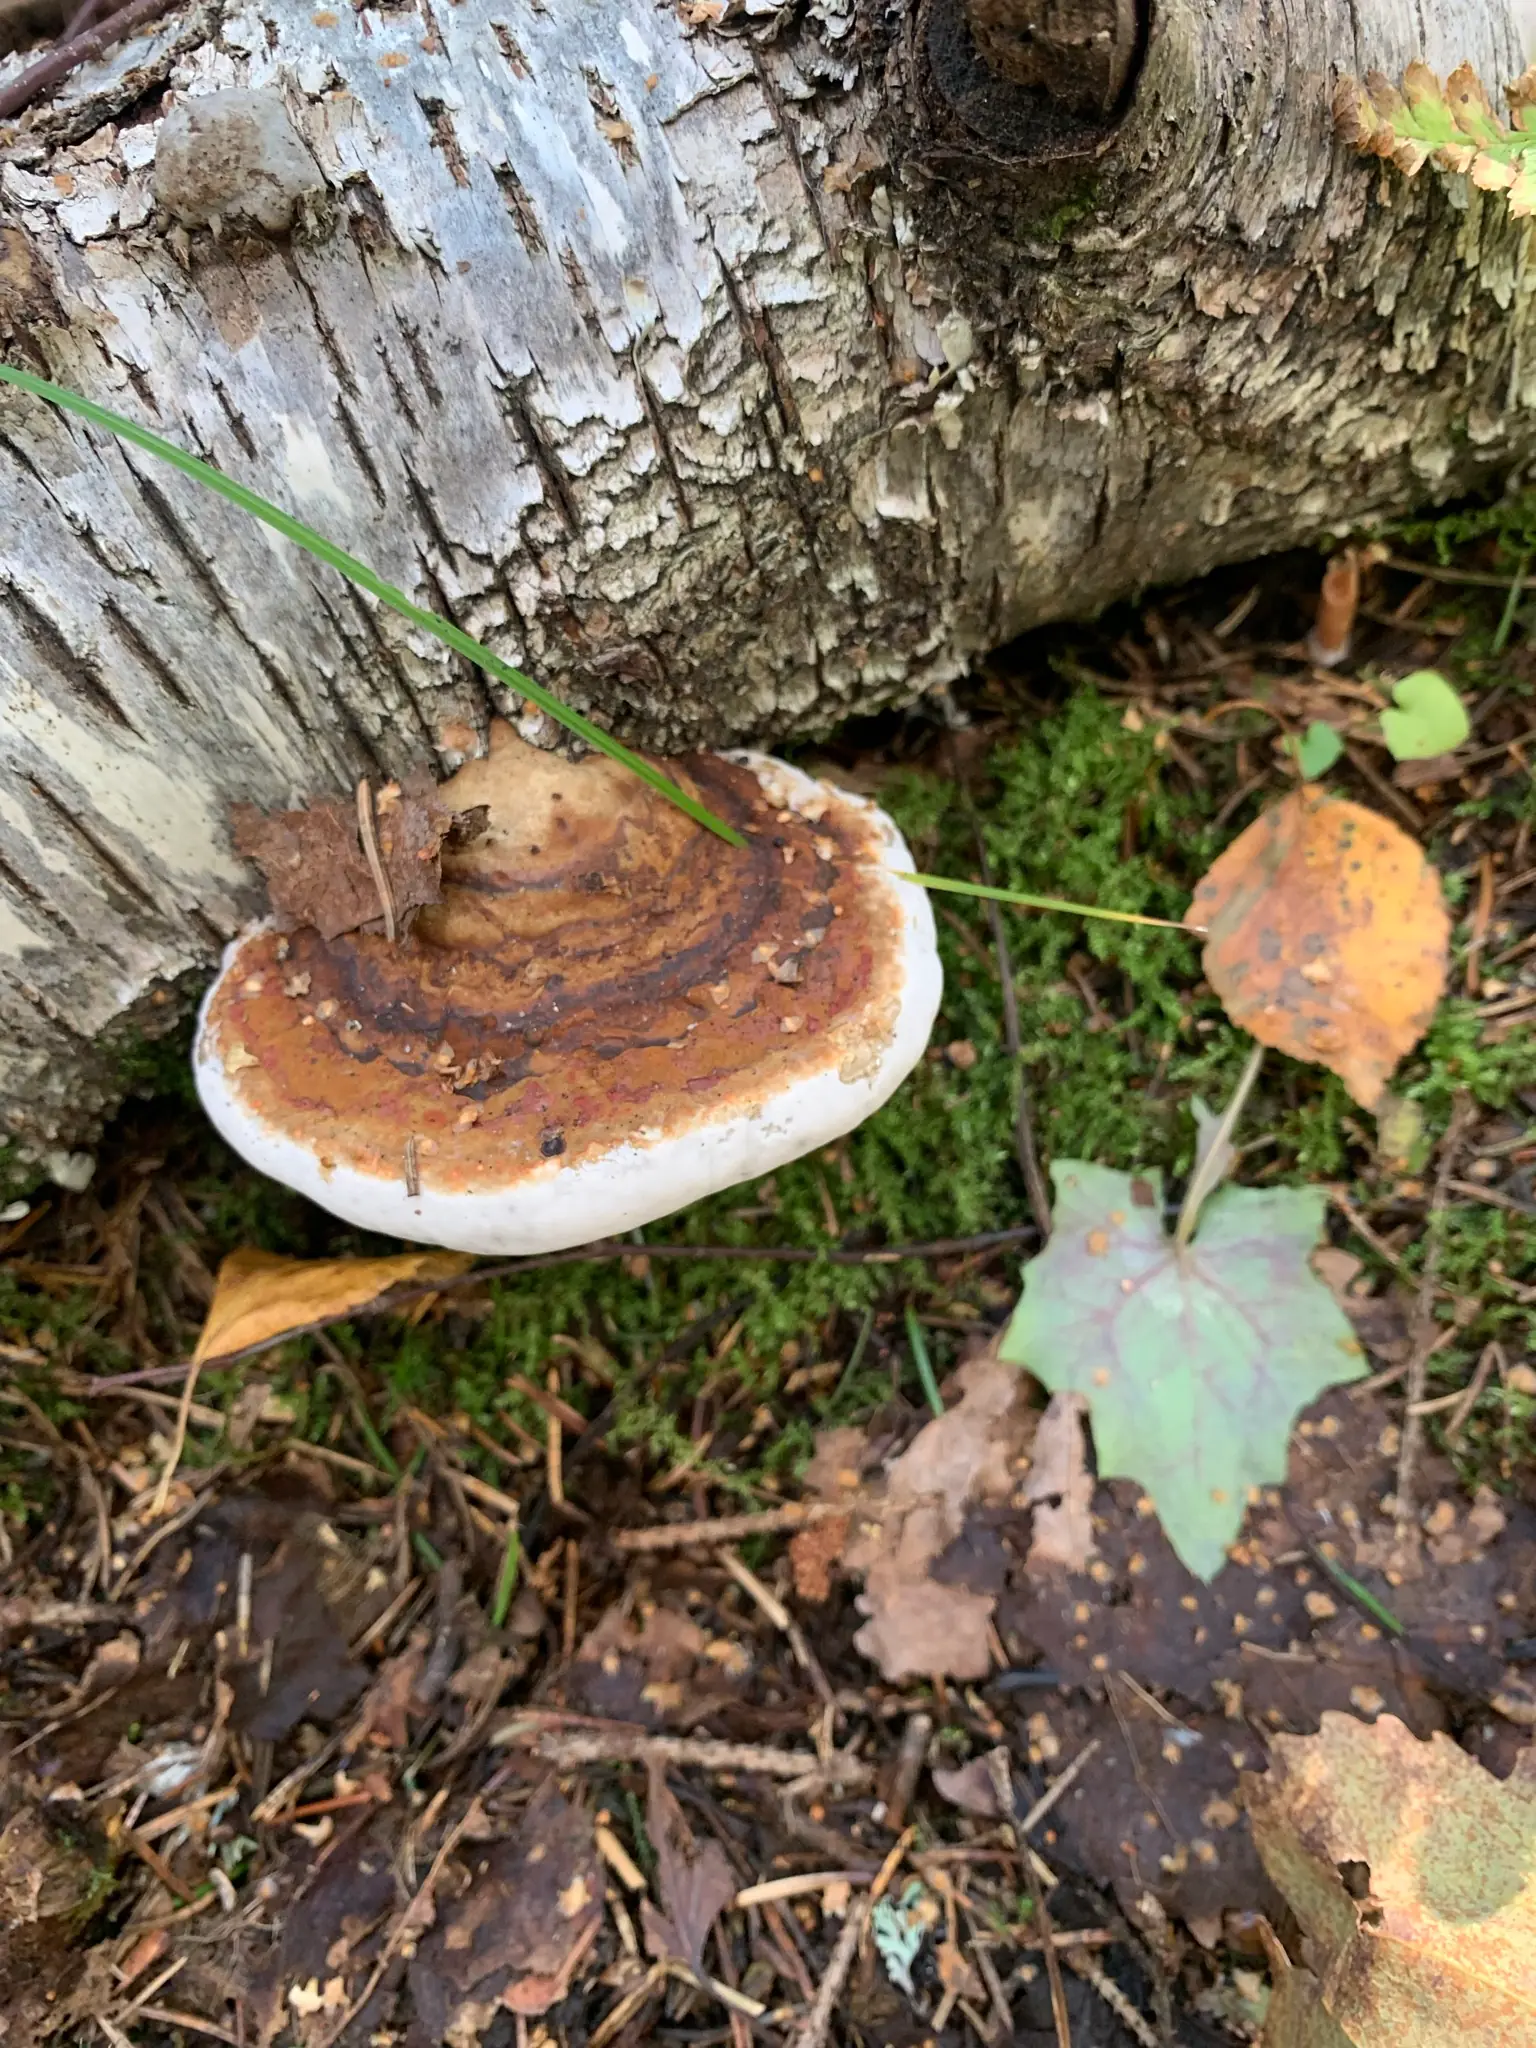 large brown mushroom growing from a fallen tree